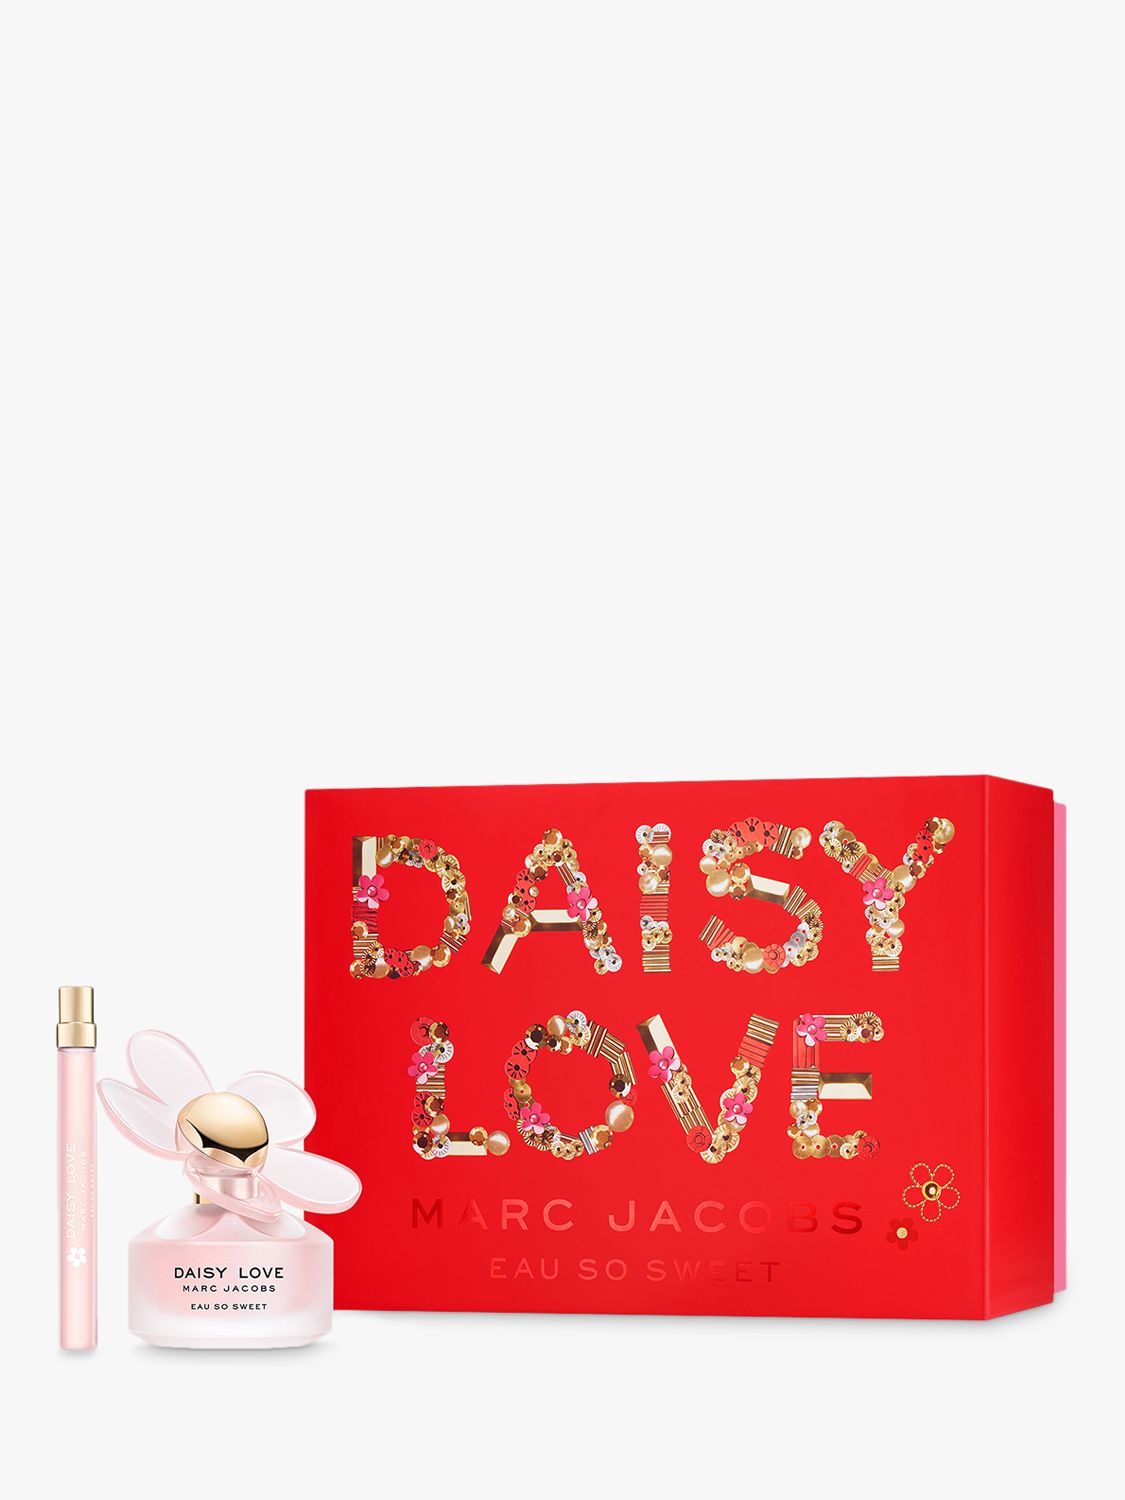 Marc Jacobs Daisy Love Eau So Sweet Eau de Toilette 50ml Fragrance Gift Set